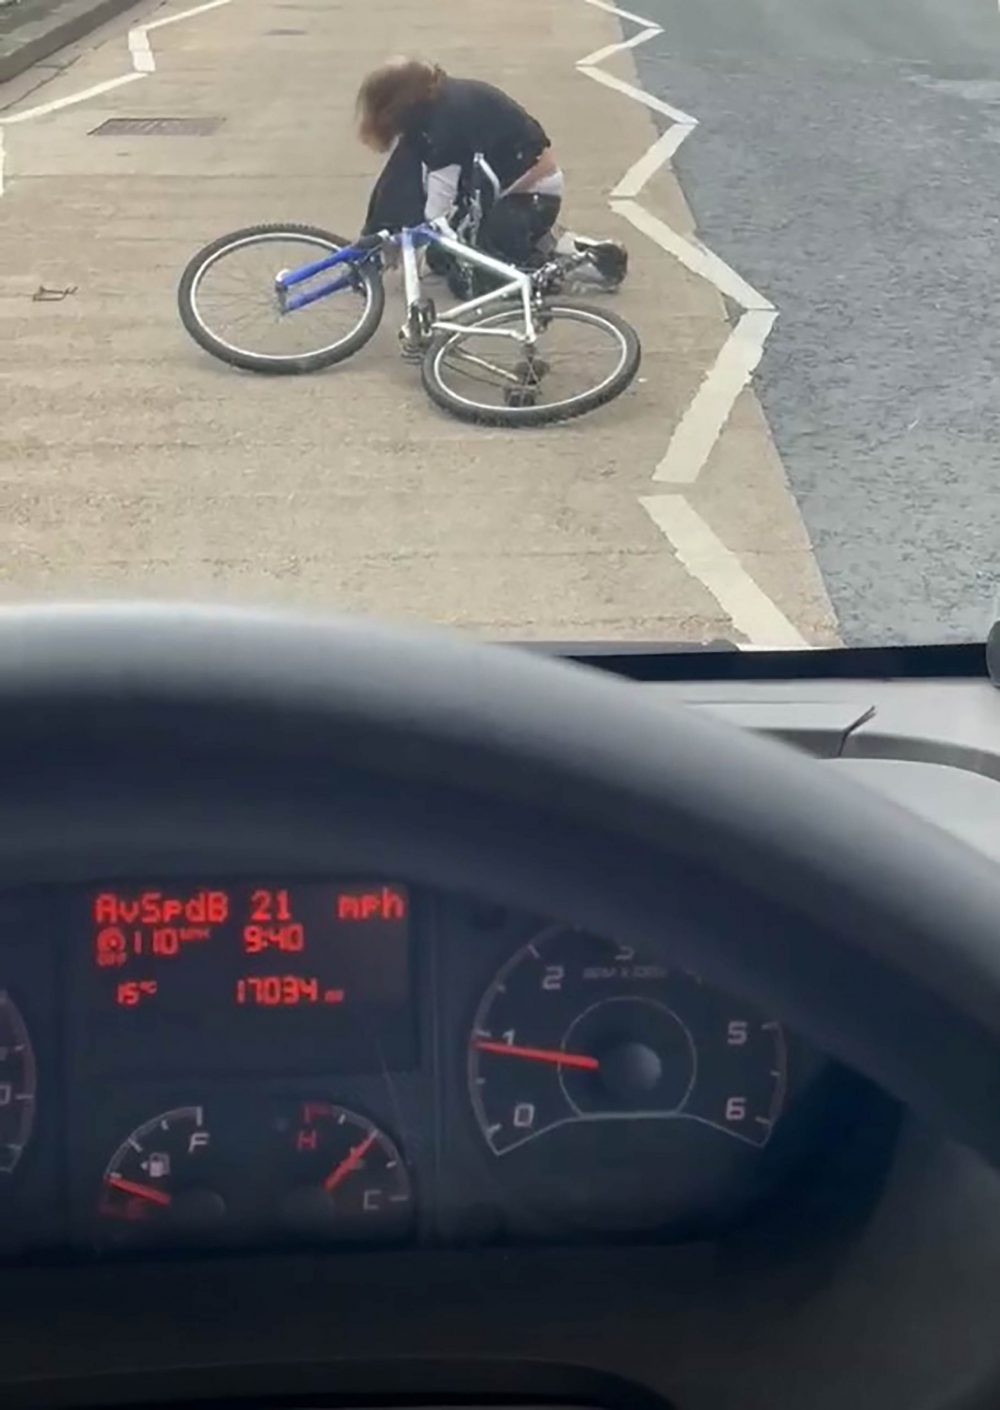 The cyclist sprawled on the pavement - Traffic News UK